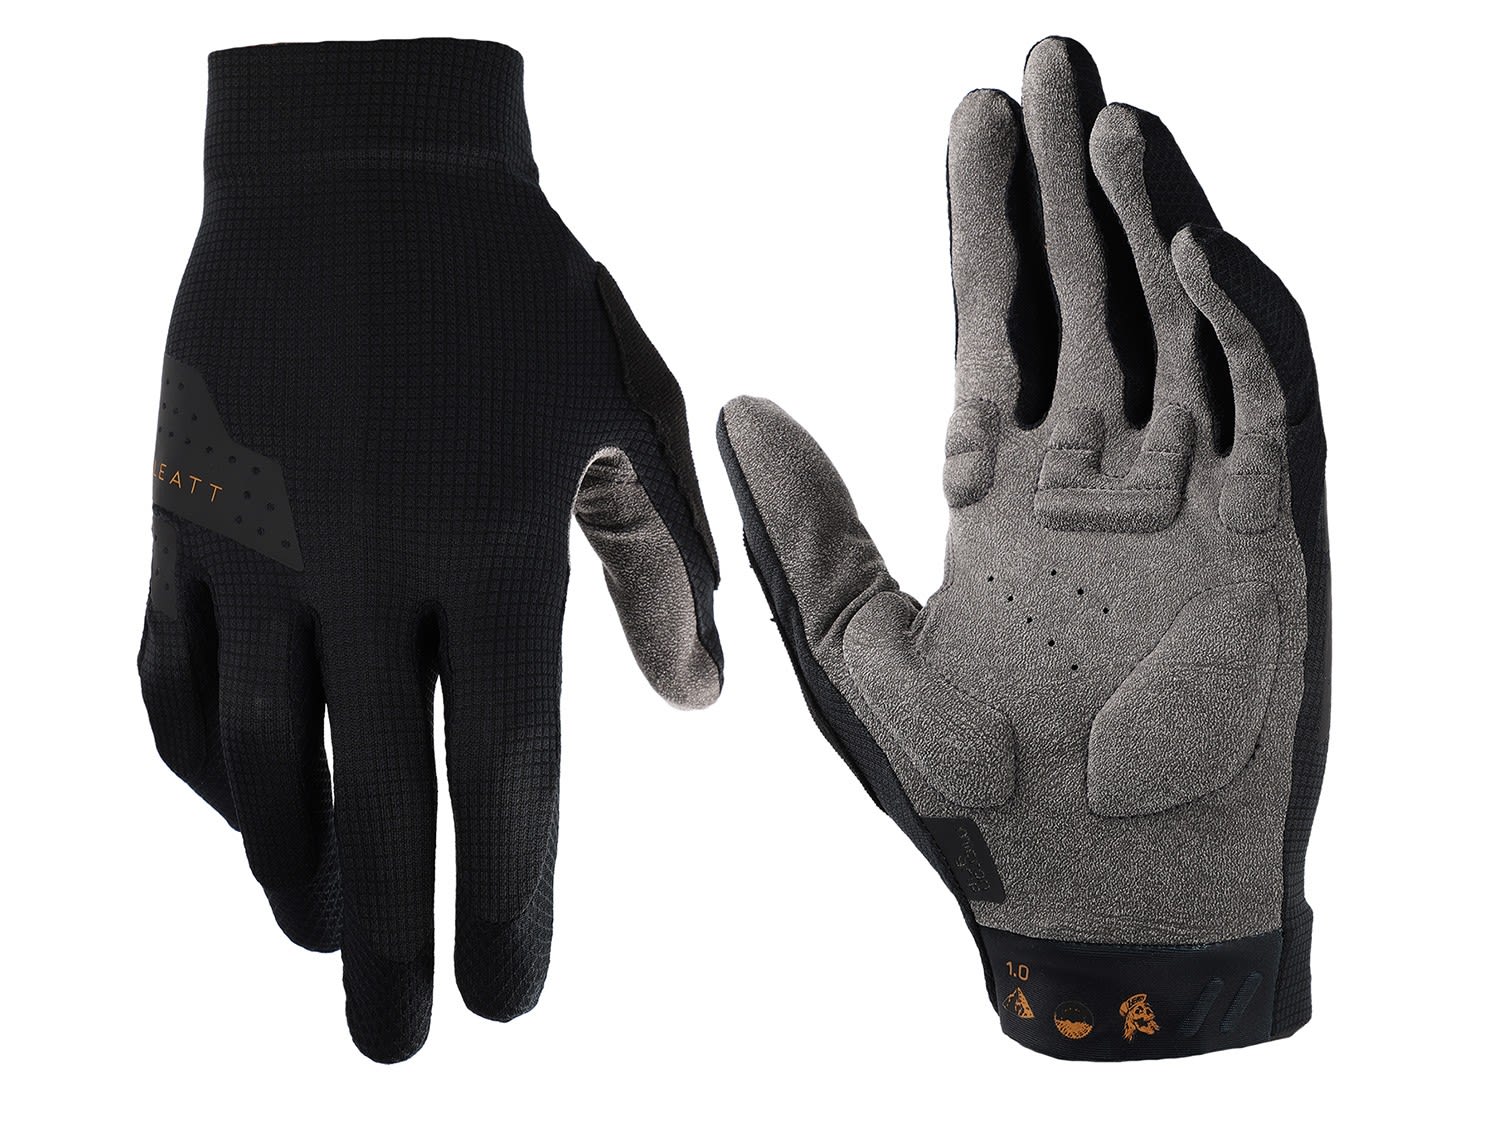 Leatt Glove MTB 1-0 Padded Palm Schwarz- Fingerhandschuhe- Grsse S - Farbe Black unter Leatt